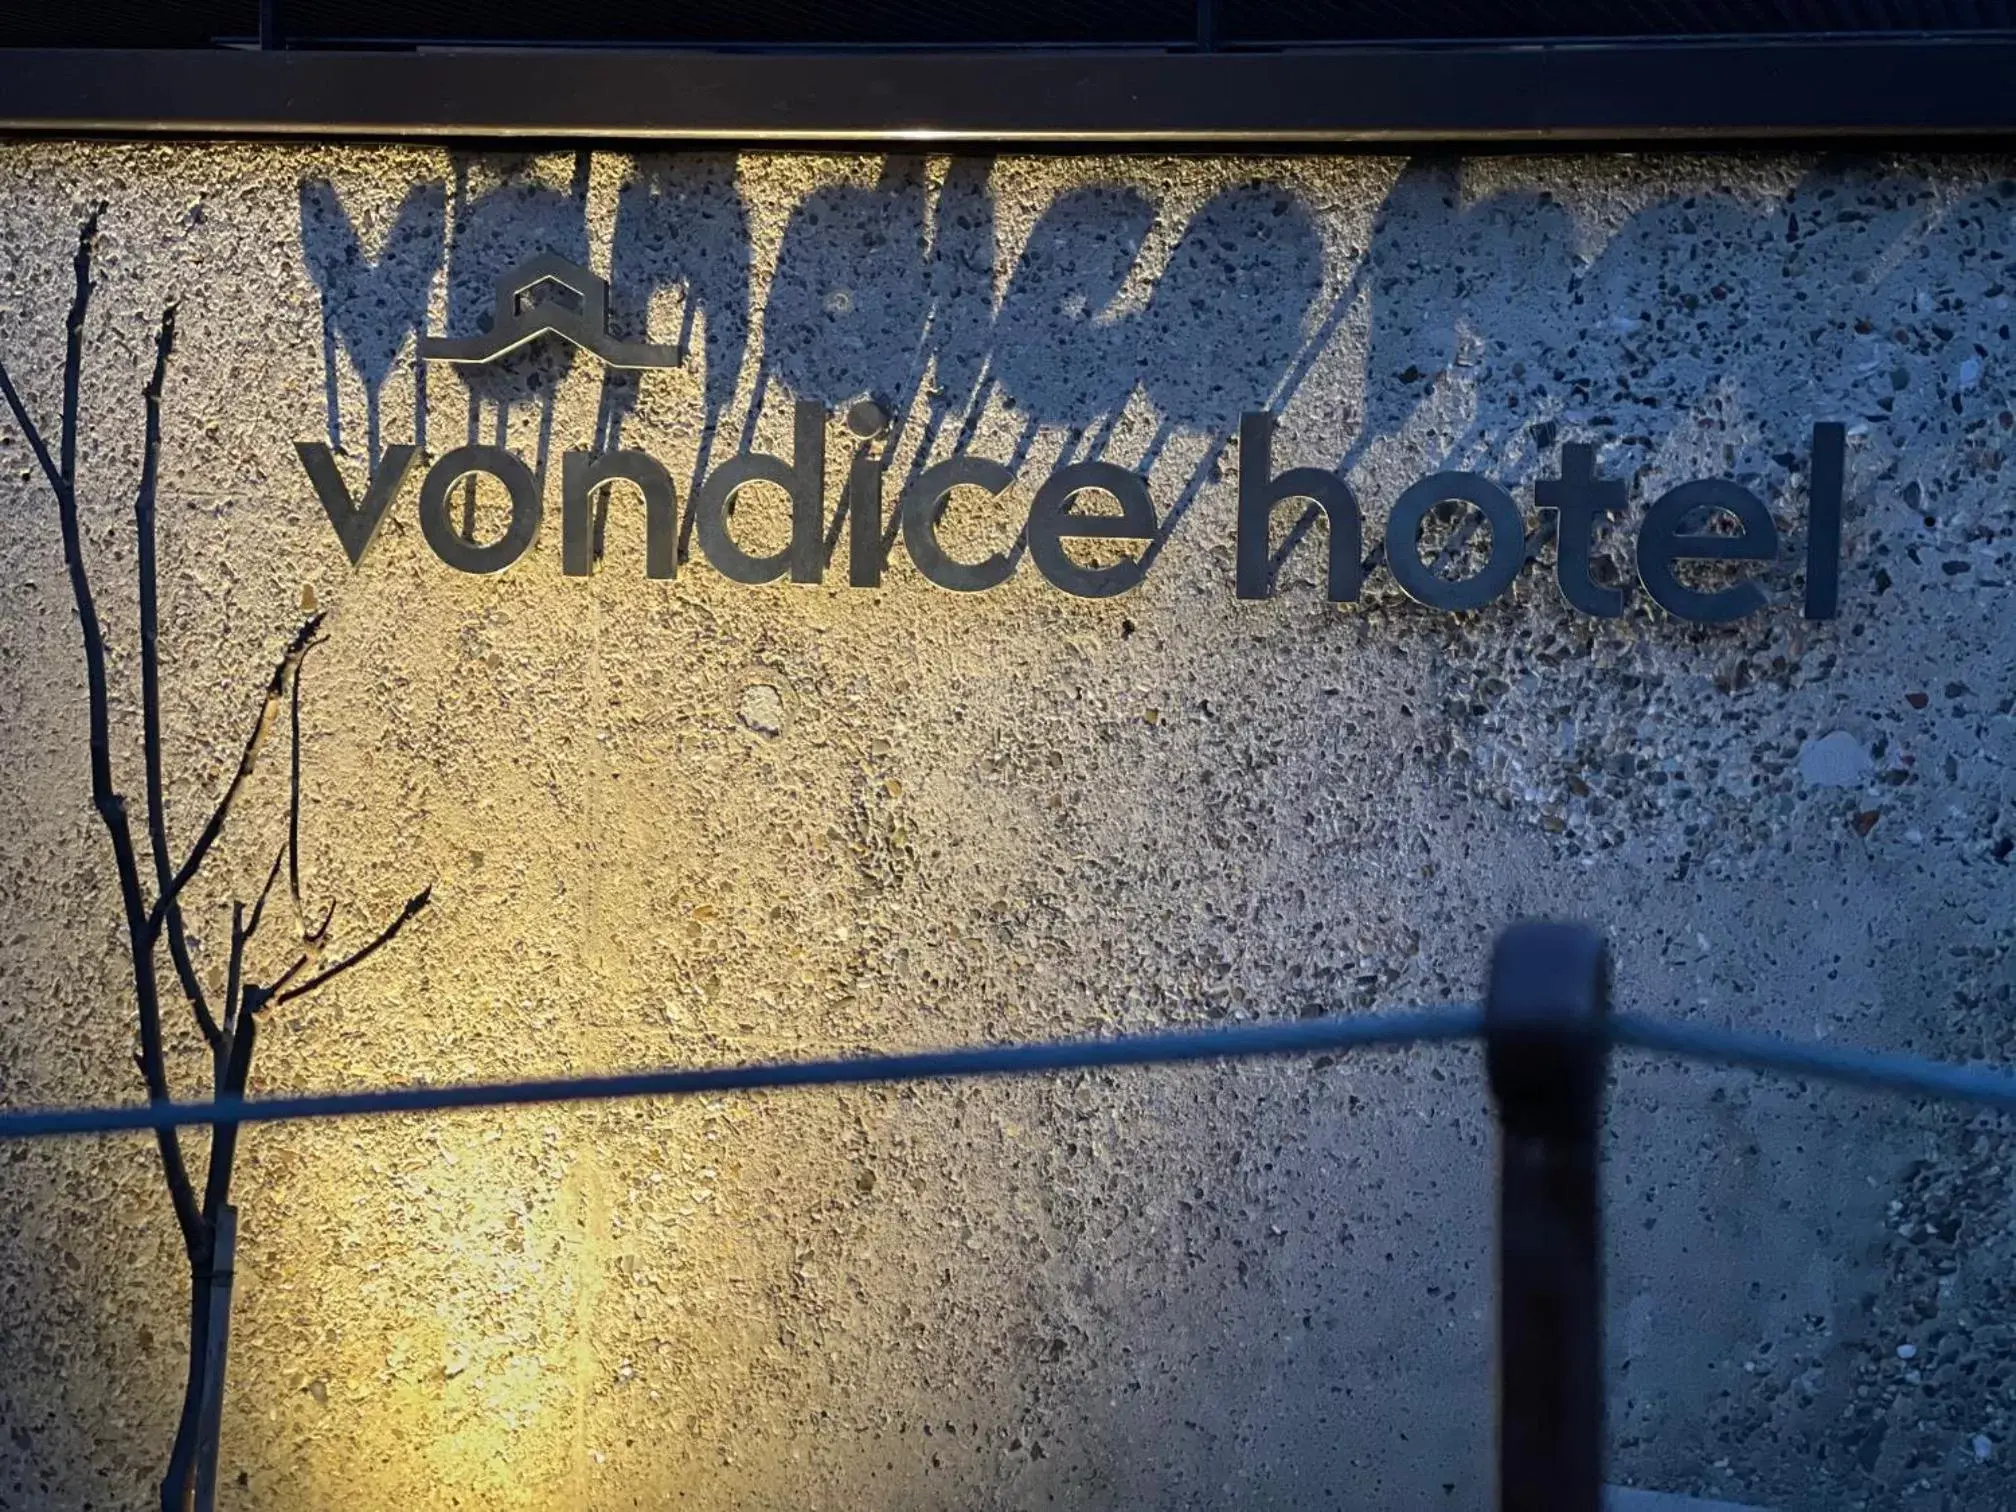 Property logo or sign in vondice hotel